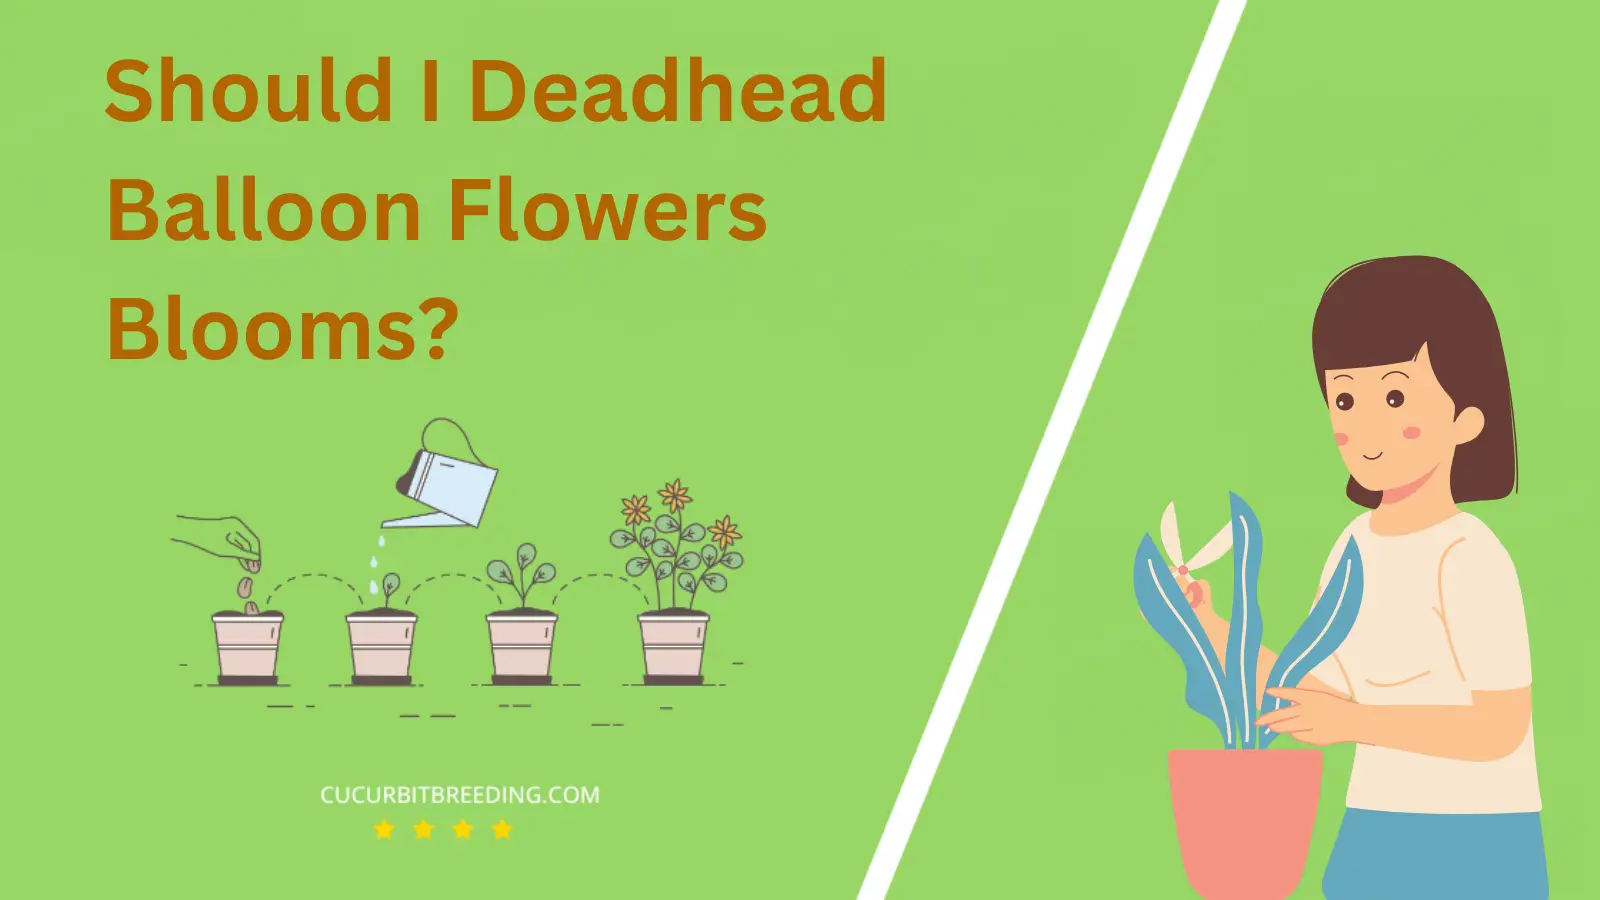 Should I Deadhead Balloon Flowers Blooms?